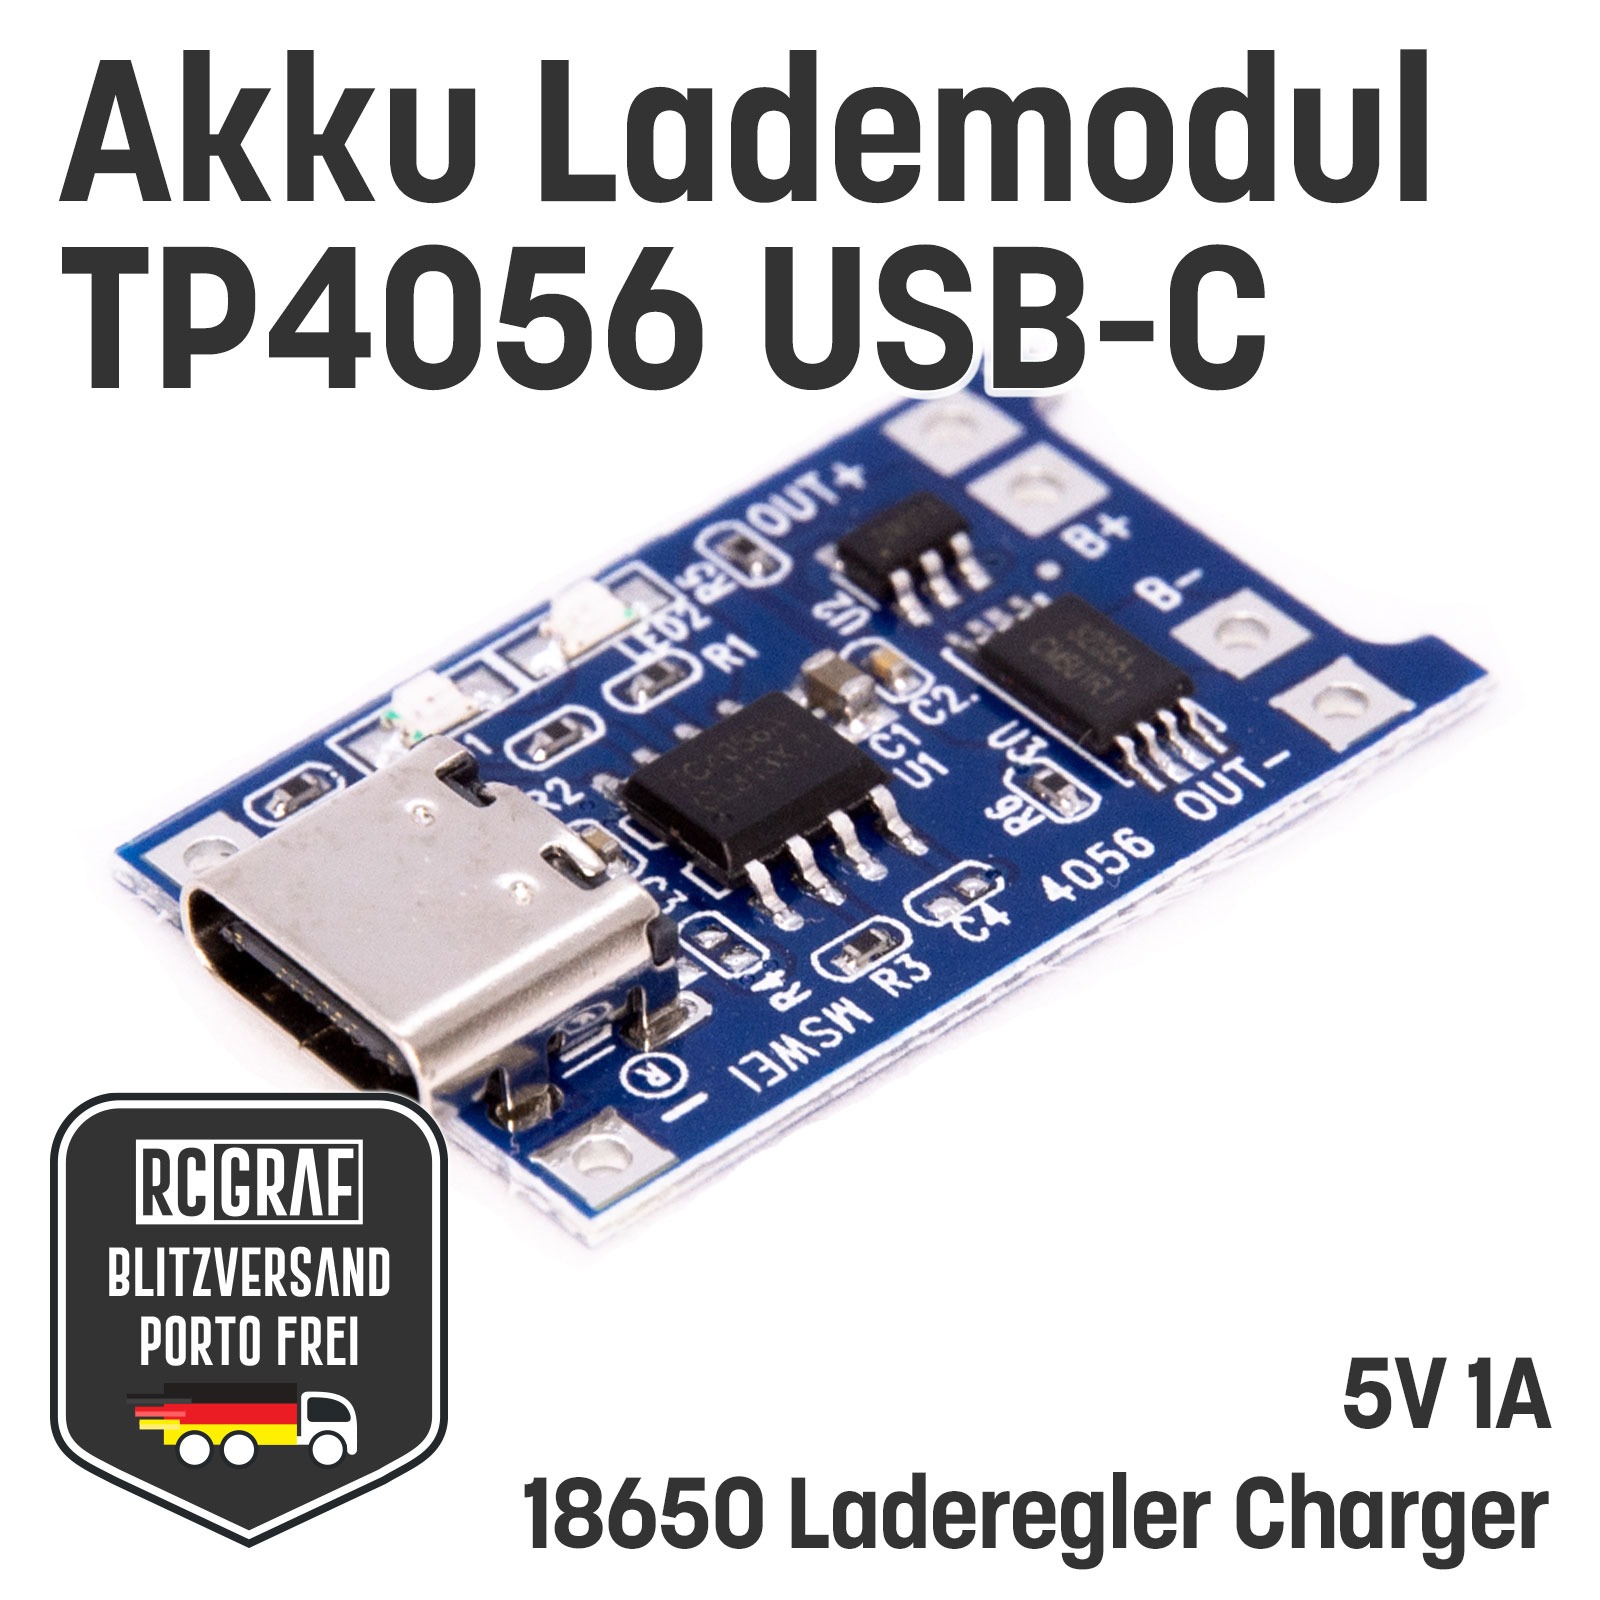 40x Akku Lademodul 5V 1A TP4056 USB C 18650 mit Schutzschaltung 2